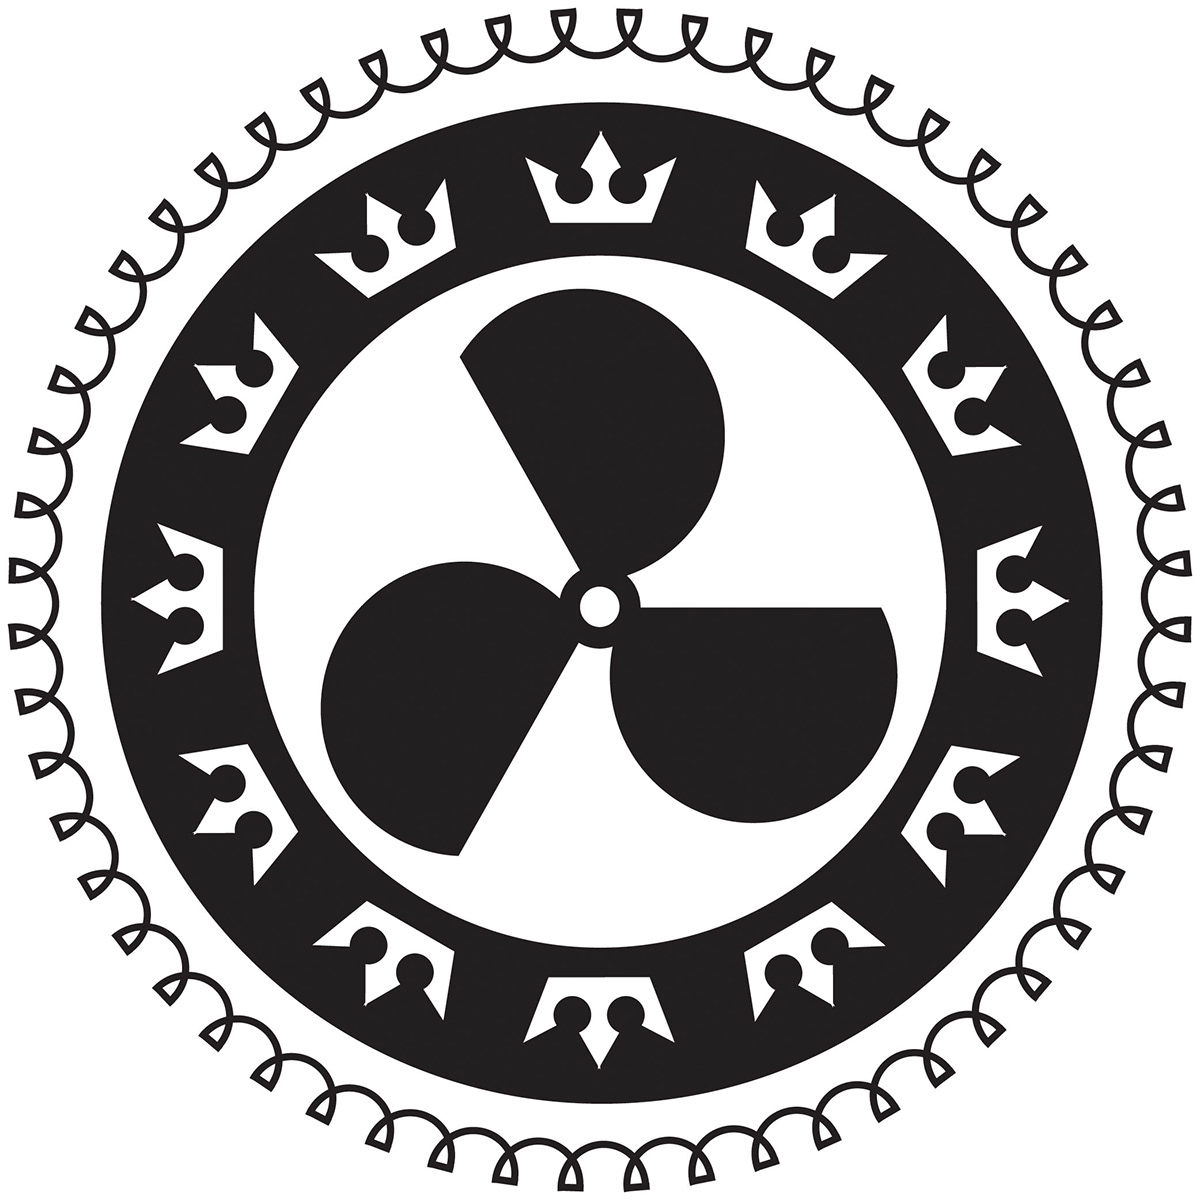 logos signs symbols England is a land of shipbuilders sailors sheepherders black & white